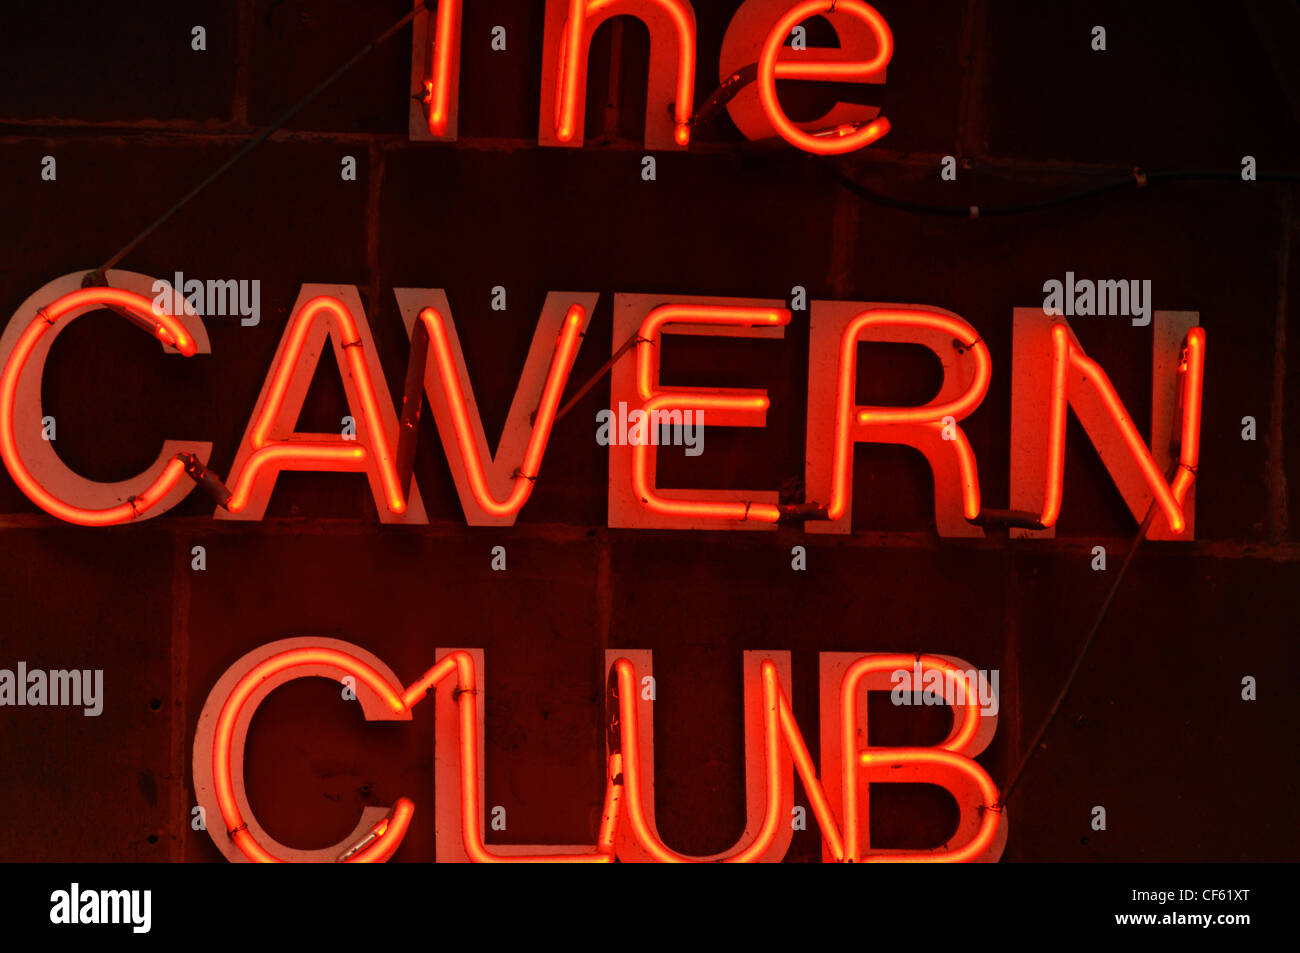 The Cavern Club Liverpool, England. Stock Photo